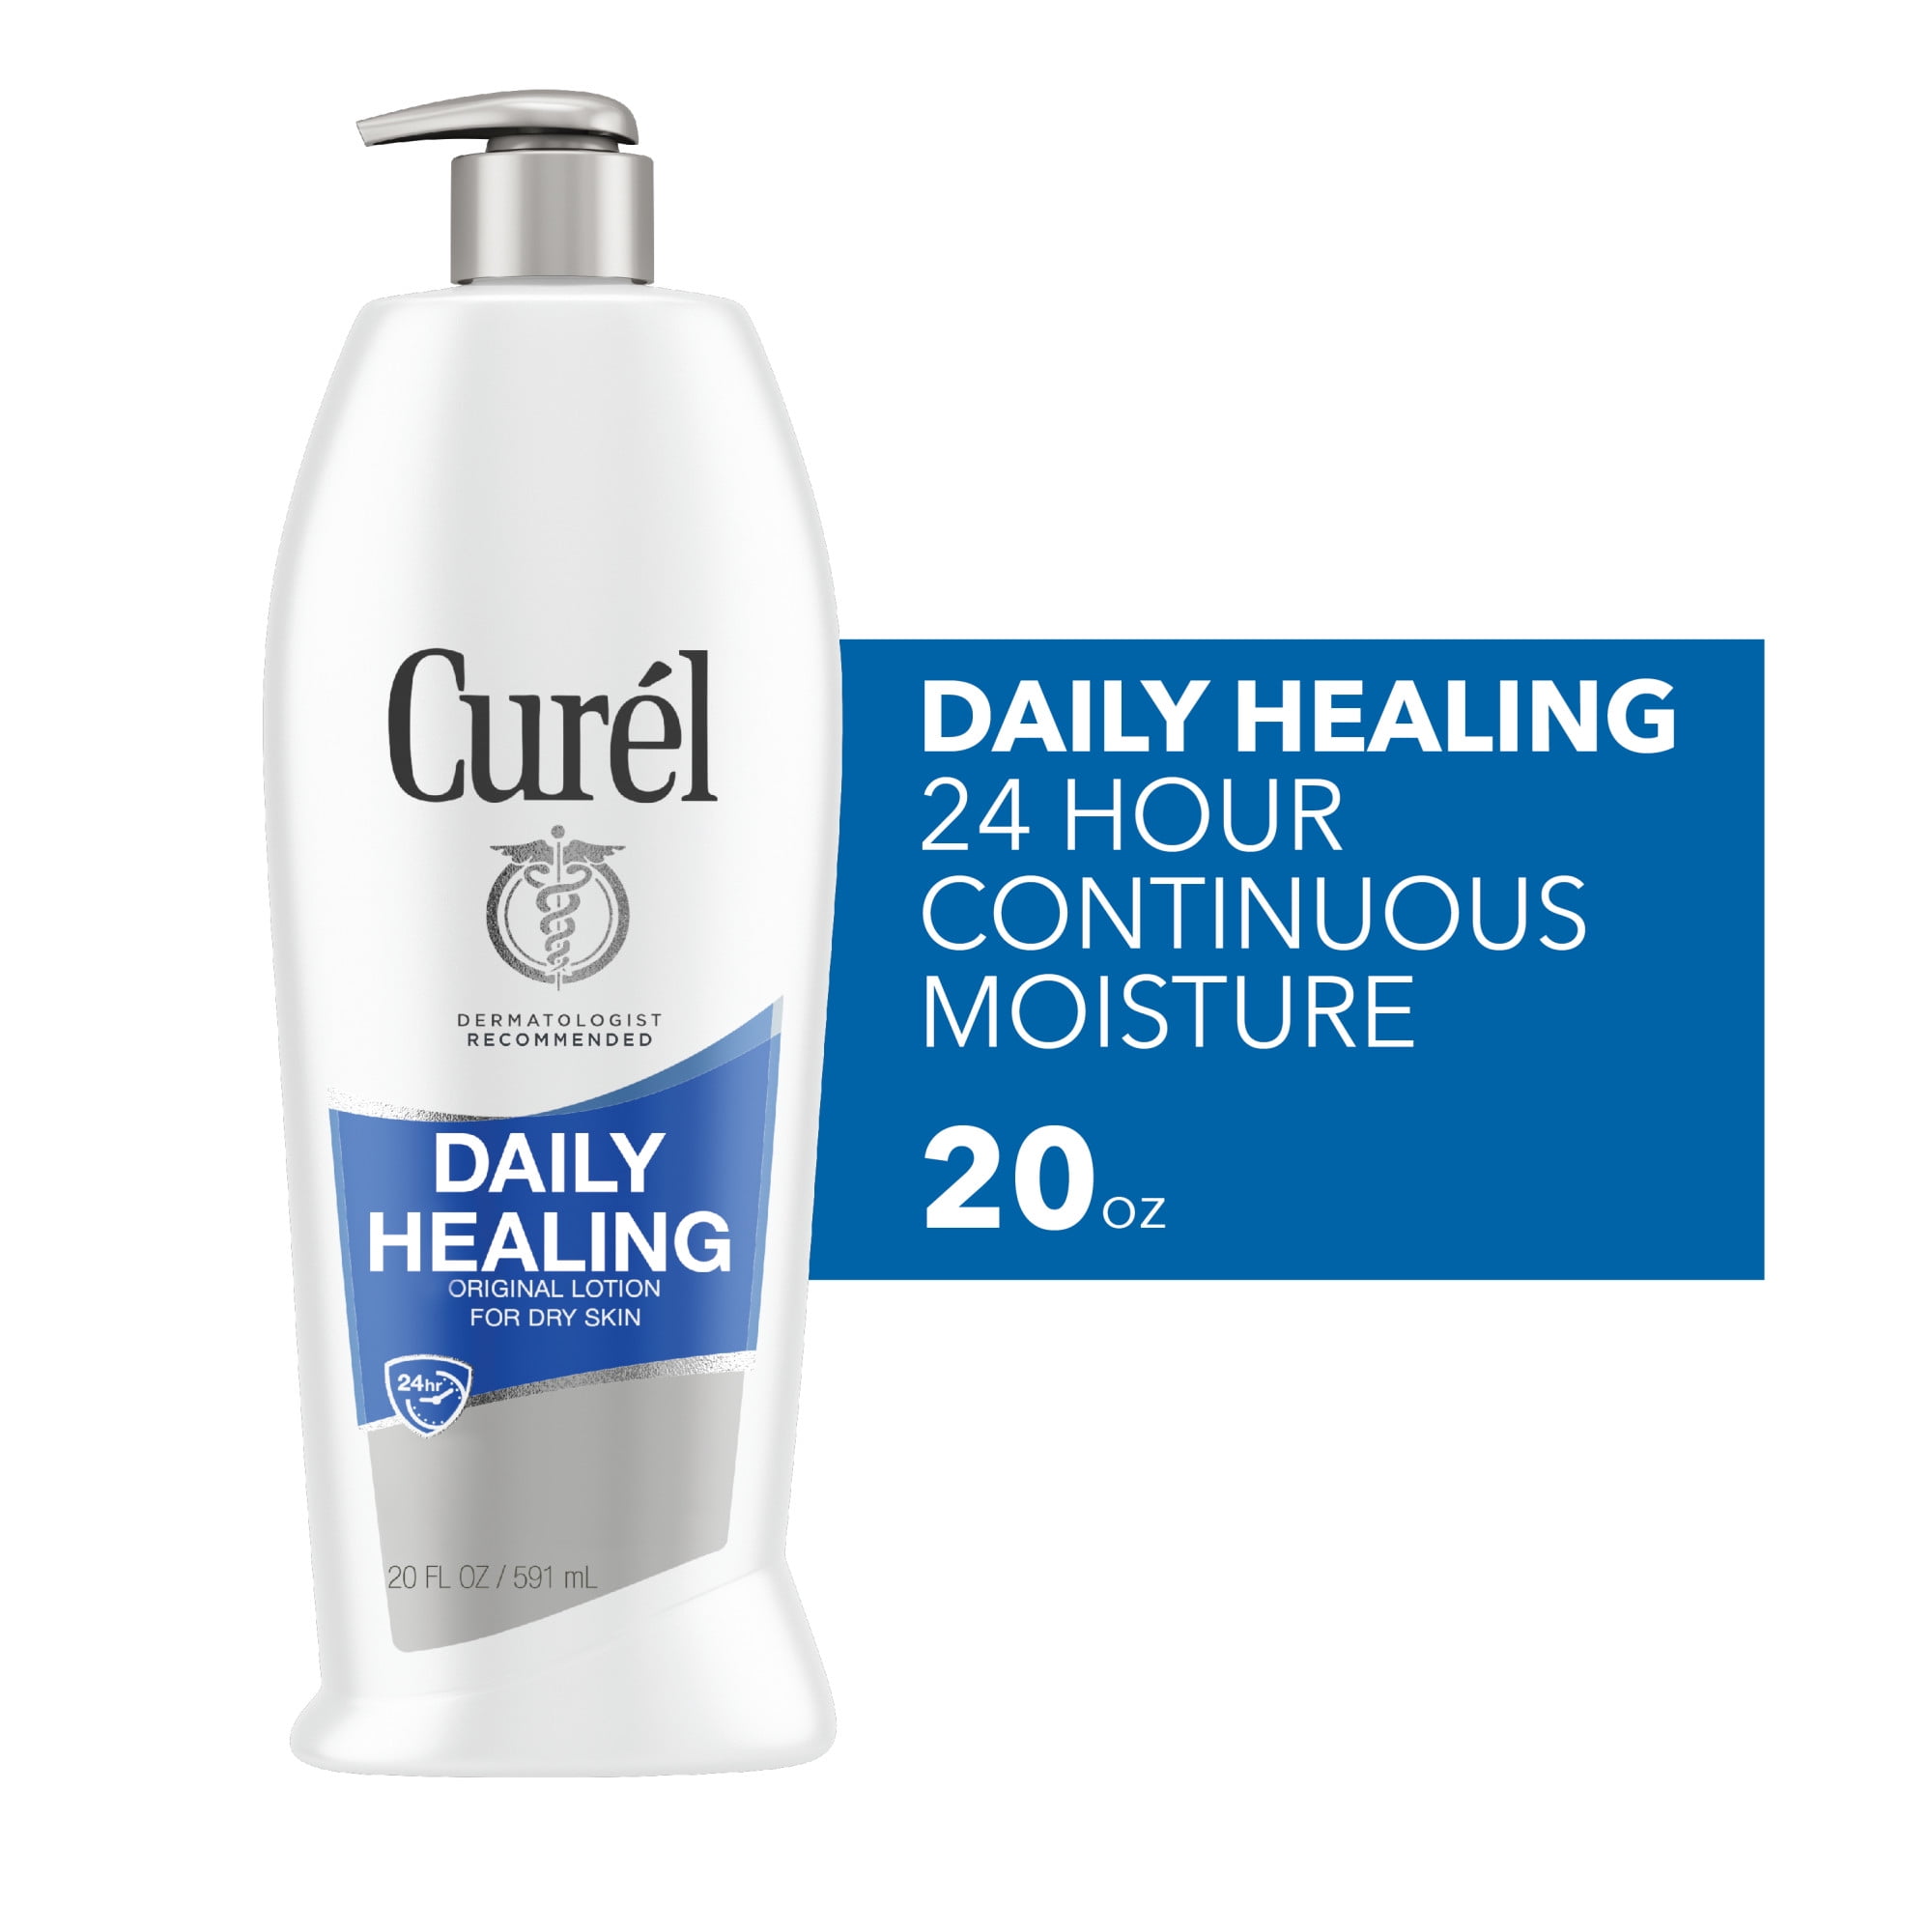 Curel Daily Healing Body Lotion for Dry Skin, 20 Fl Oz